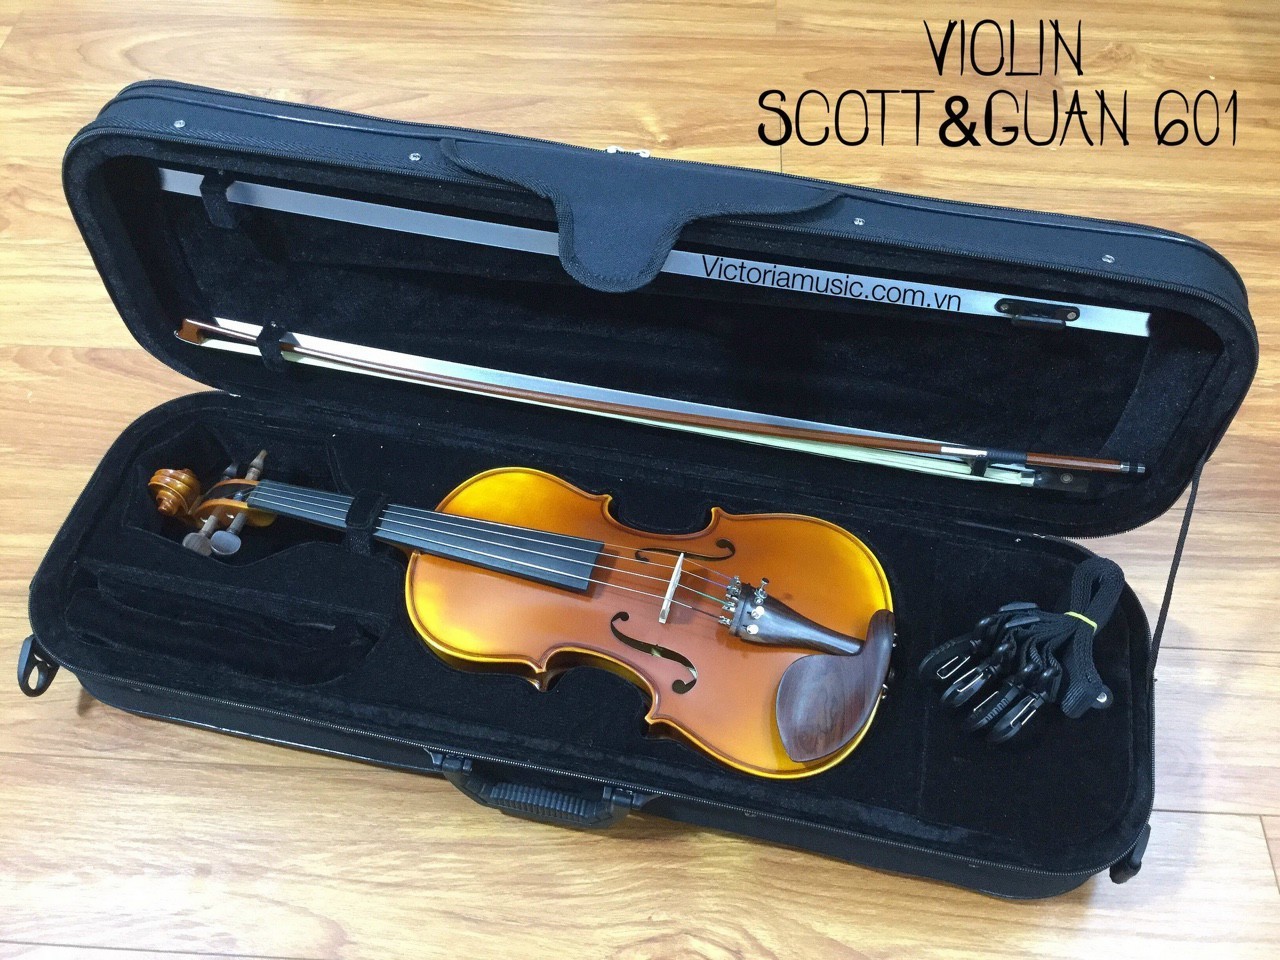 Violin Scott & Guan 601